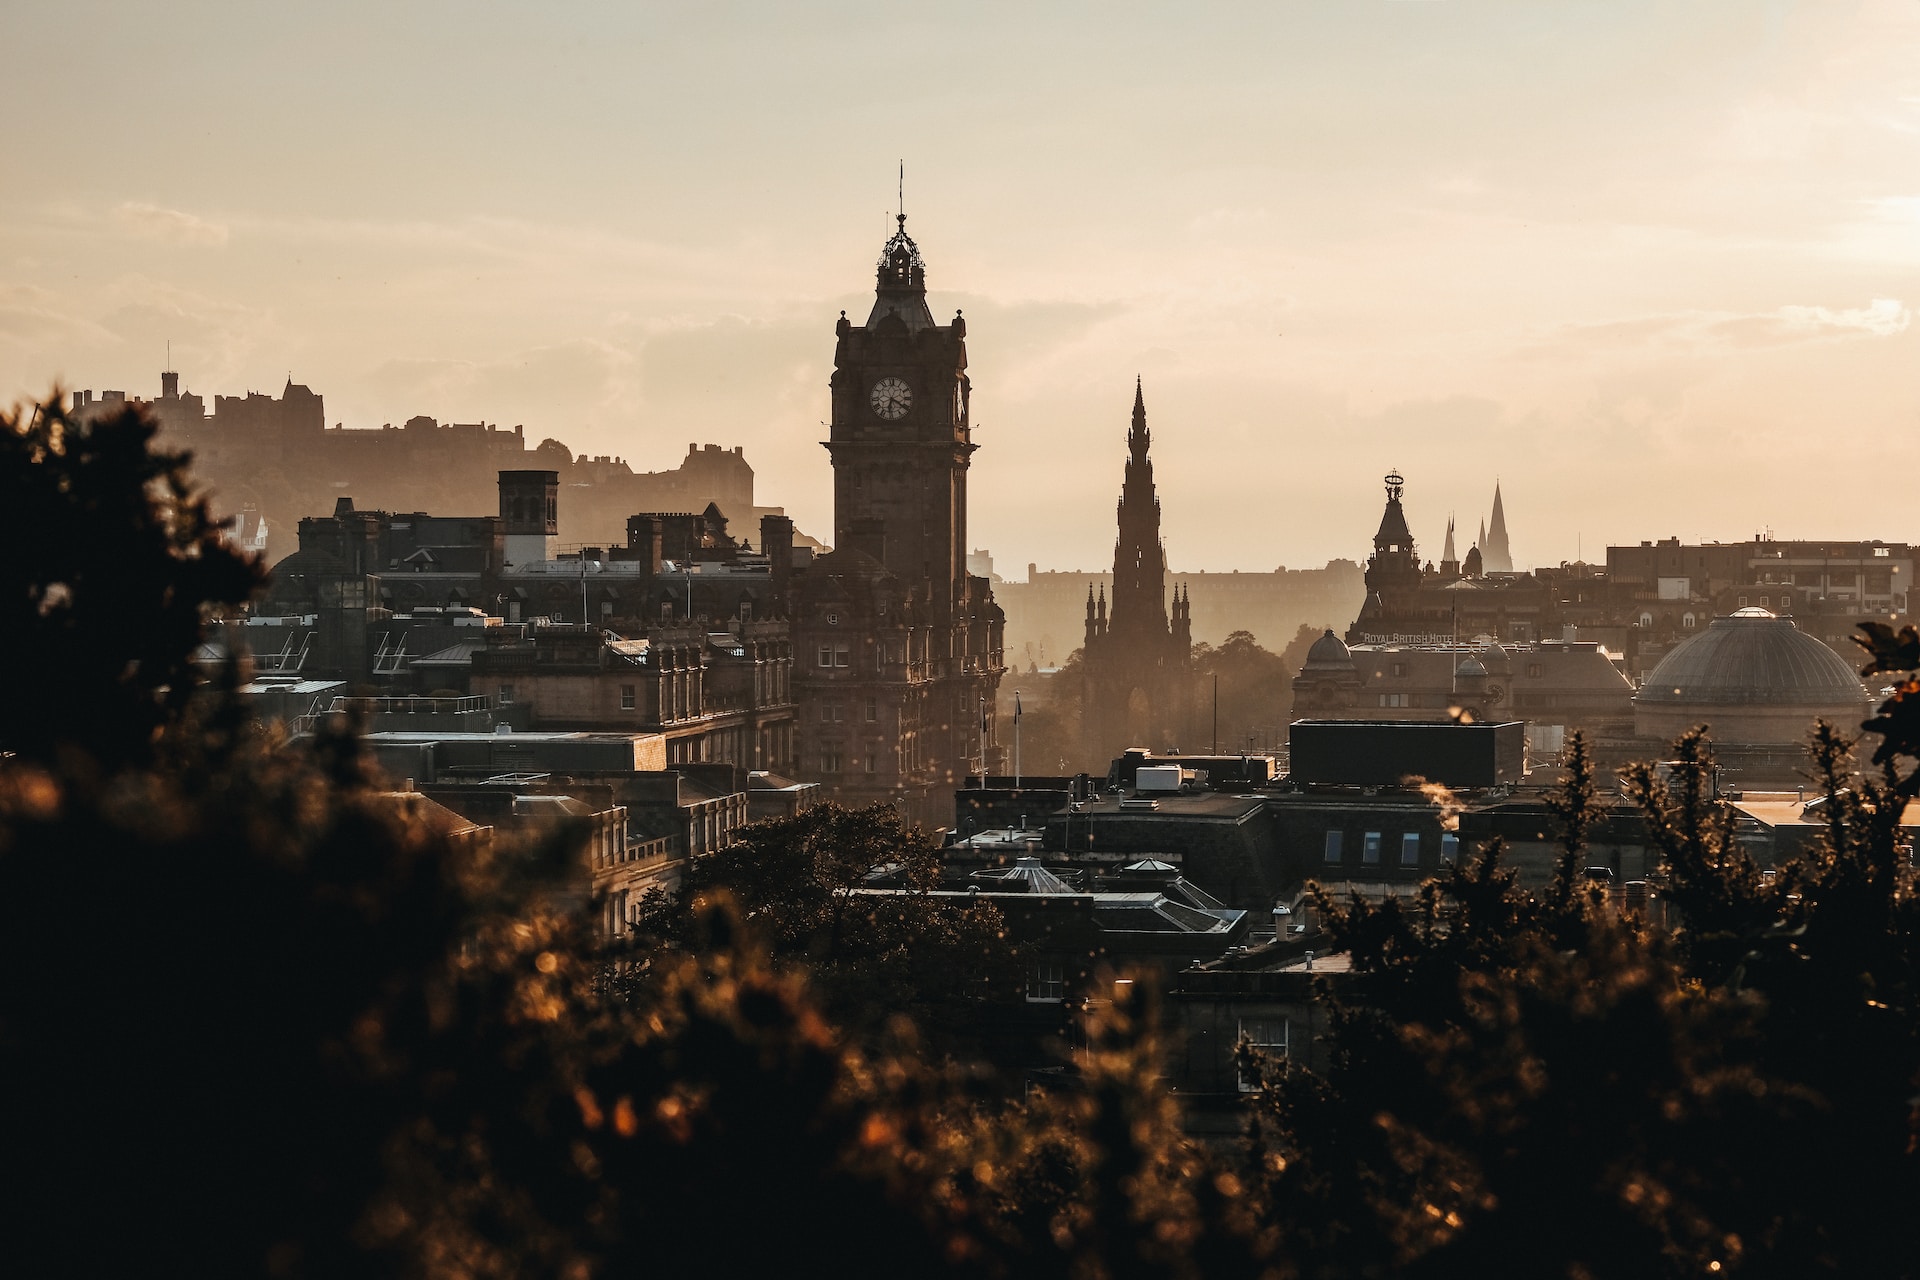 A romantic sky view of Edinburgh